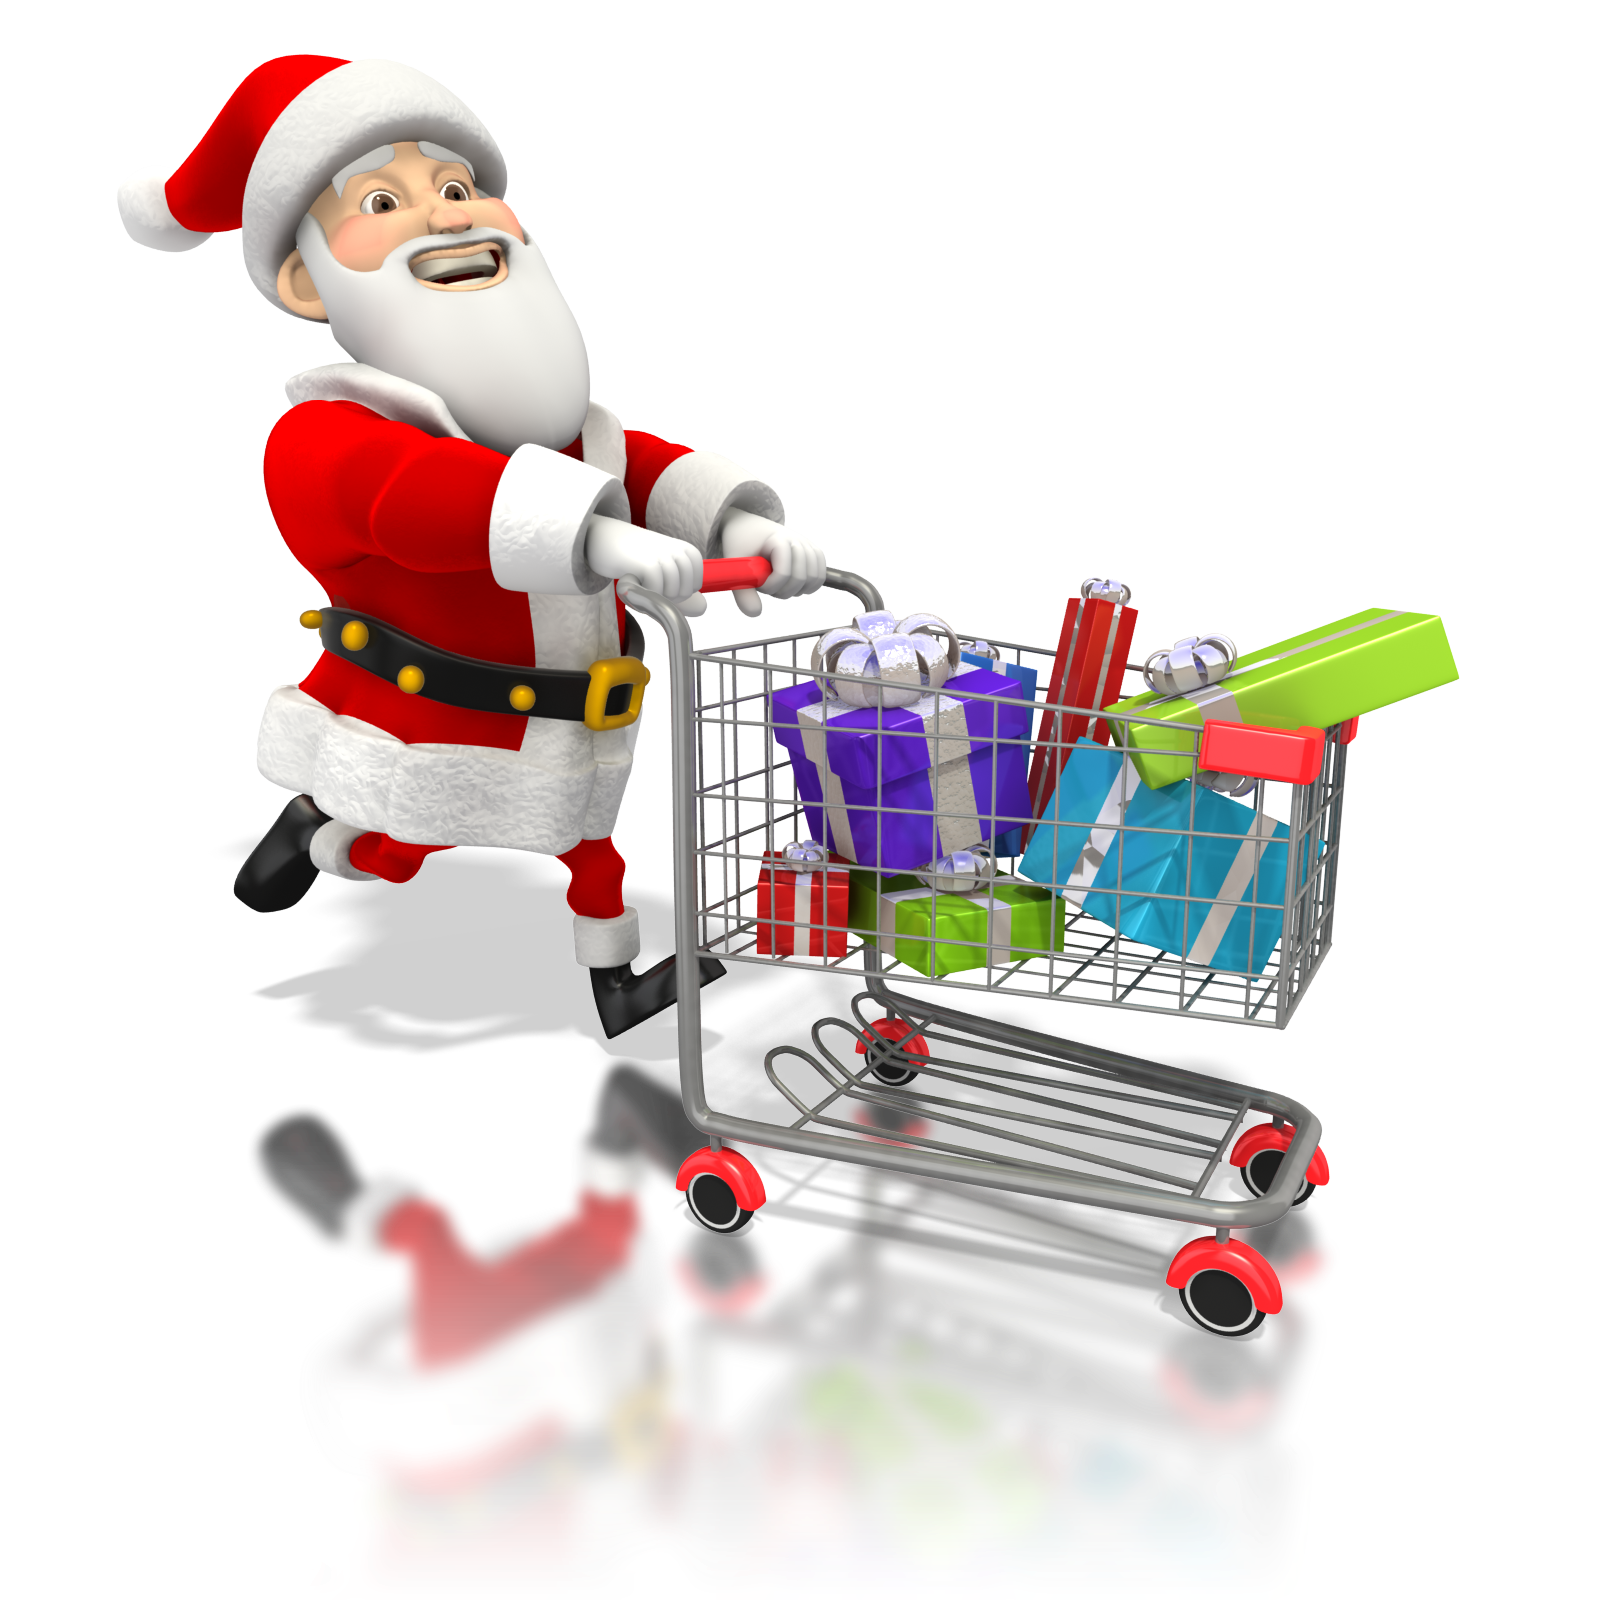 kisspng-santa-claus-shopping-cart-online-shopping-clip-art-push-cart-5aeed55d18f621.0756502315256016291023.png